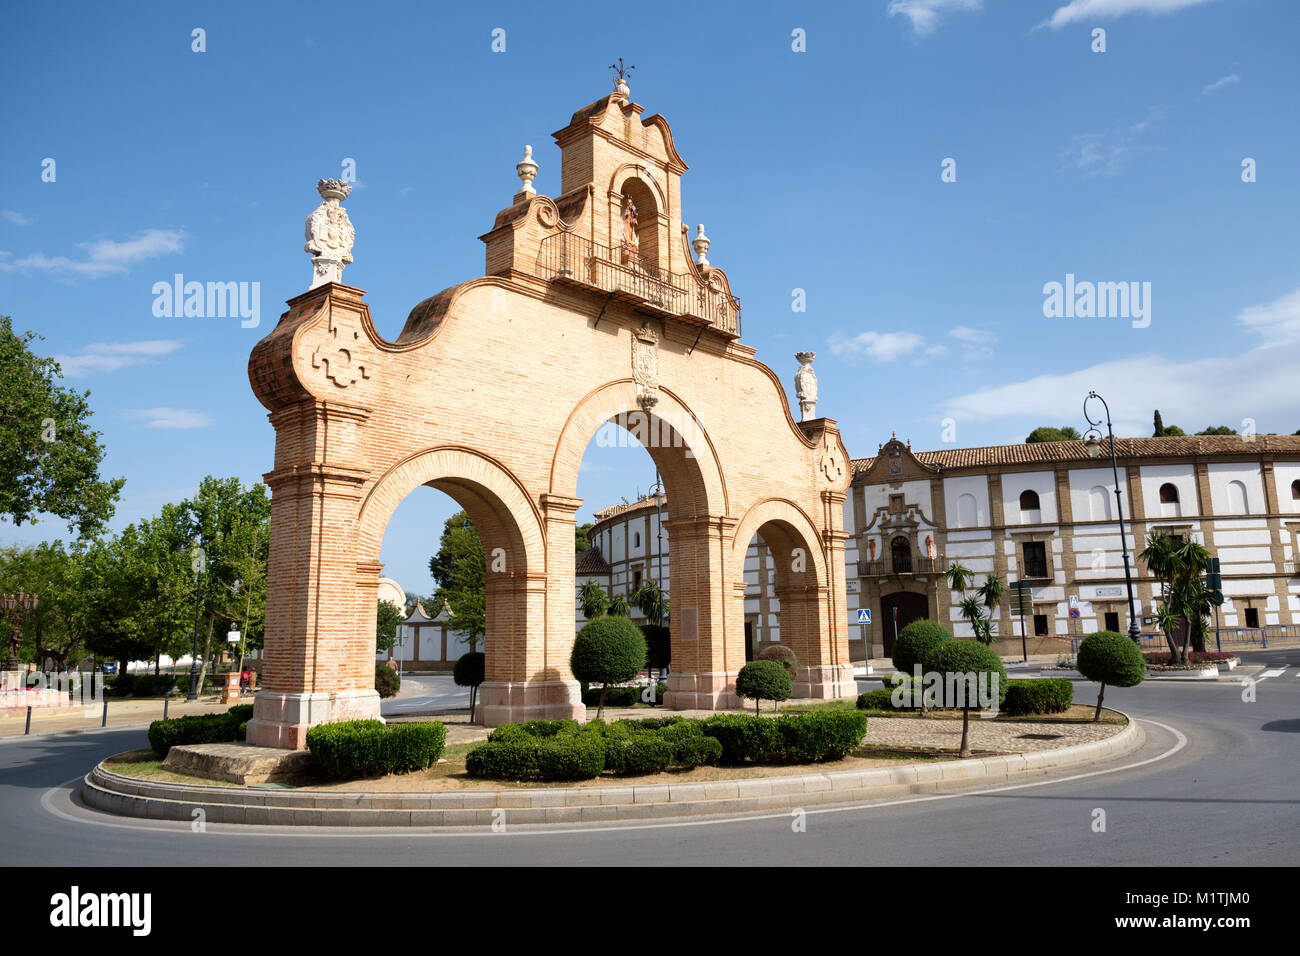 The triple arched Estepa Gate located in front of the Plaza de Torro (Bullring), Calle Almeda, Antequera, Malaga province, Andalusia, Spain Stock Photo